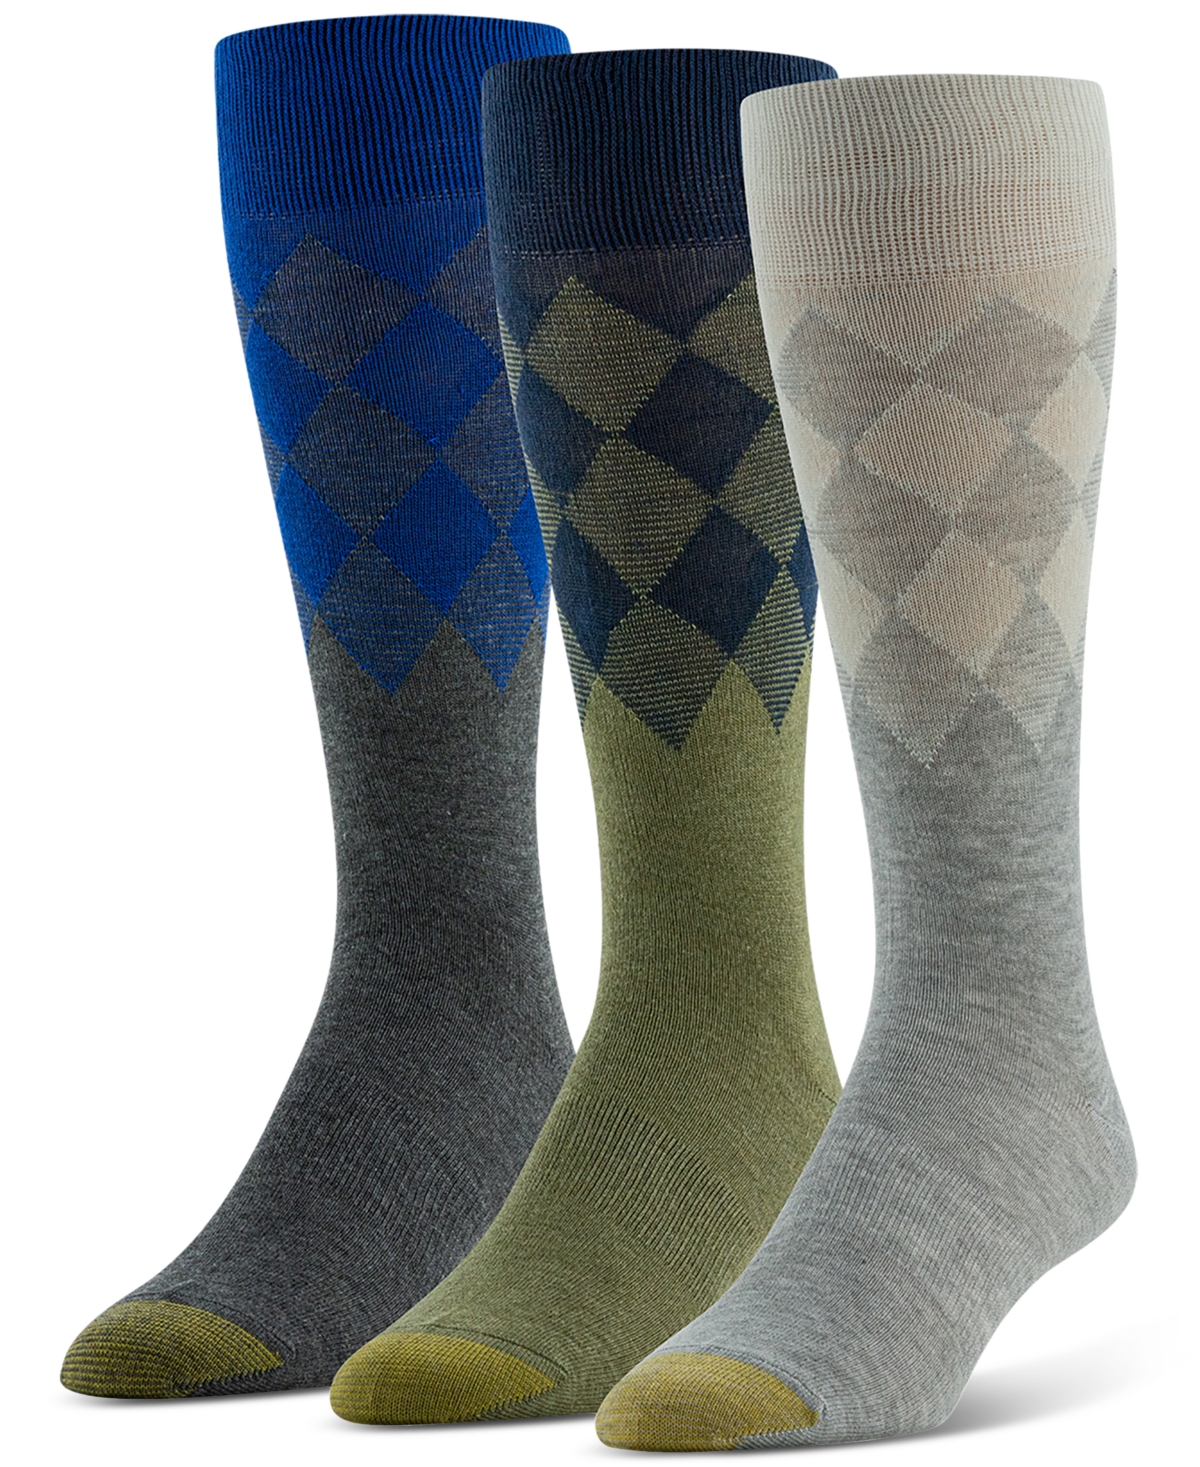 Men's Partial Argyle Socks - 3 pk. - Asst